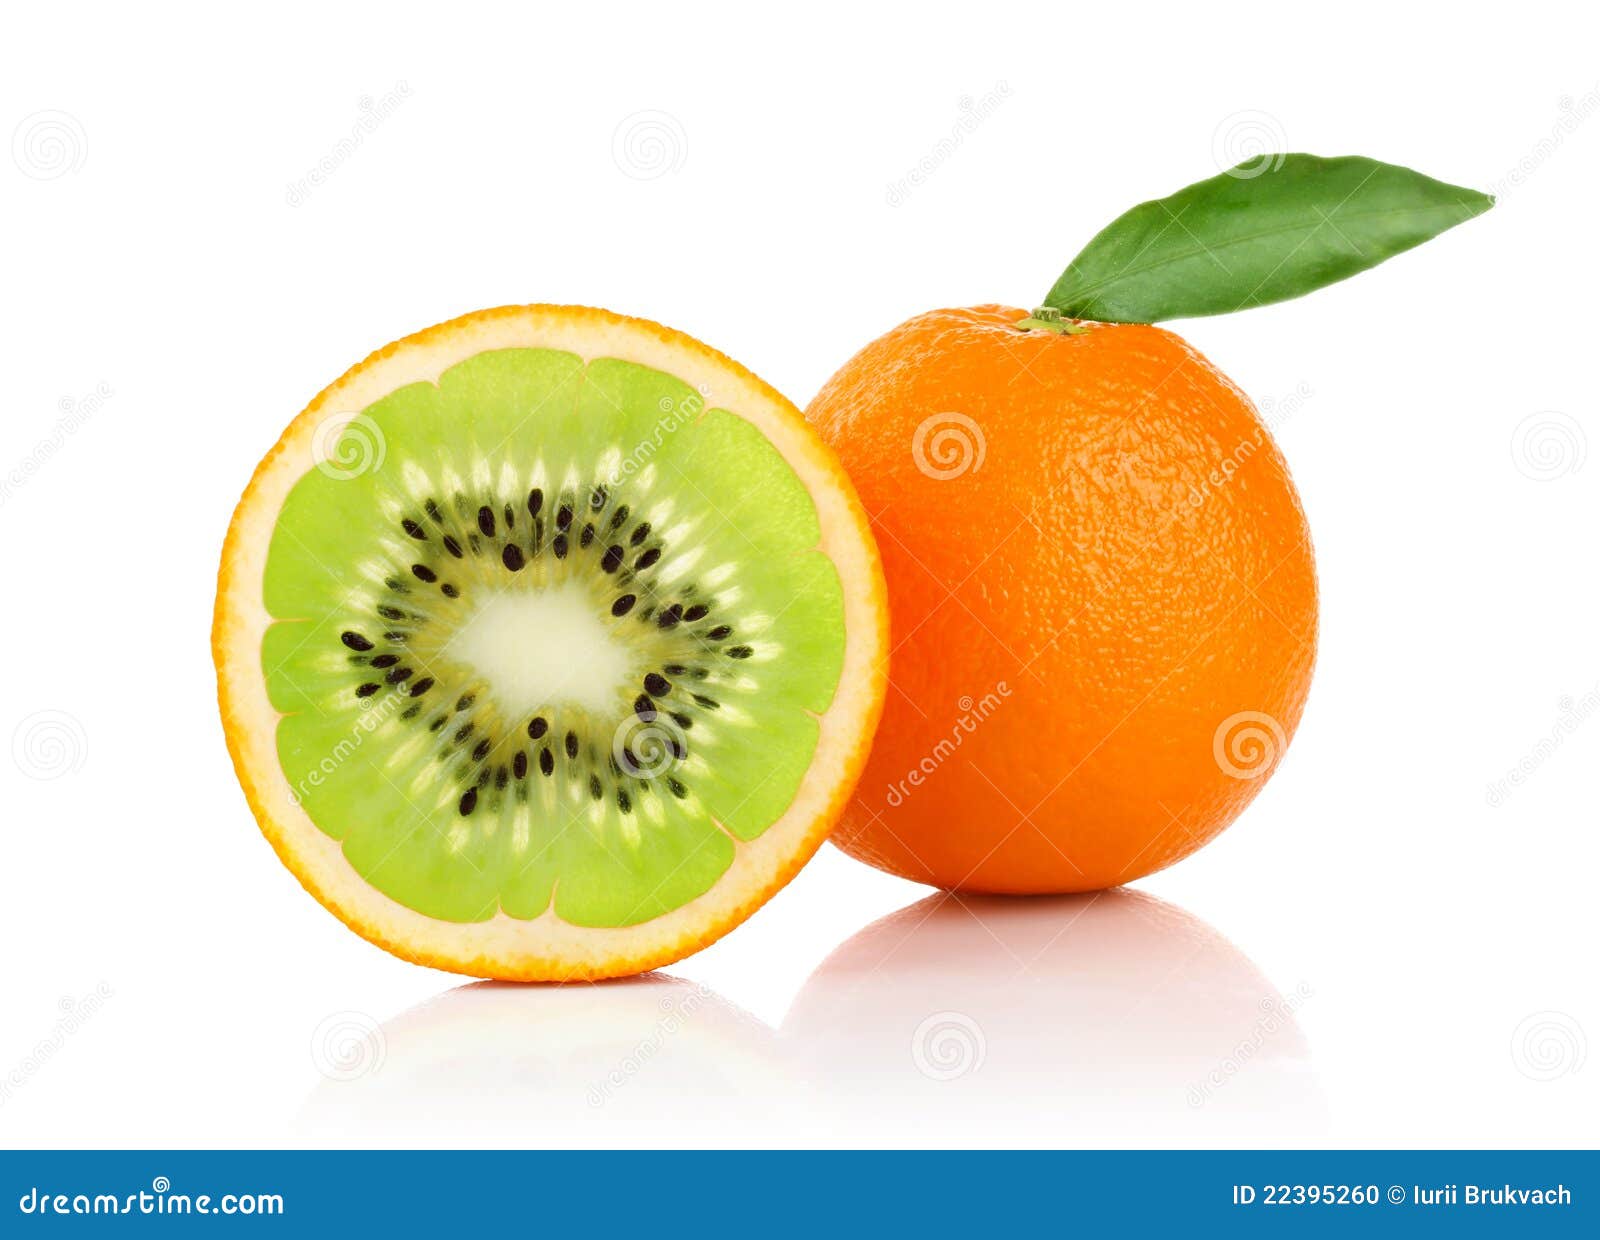 creative conception of orange and